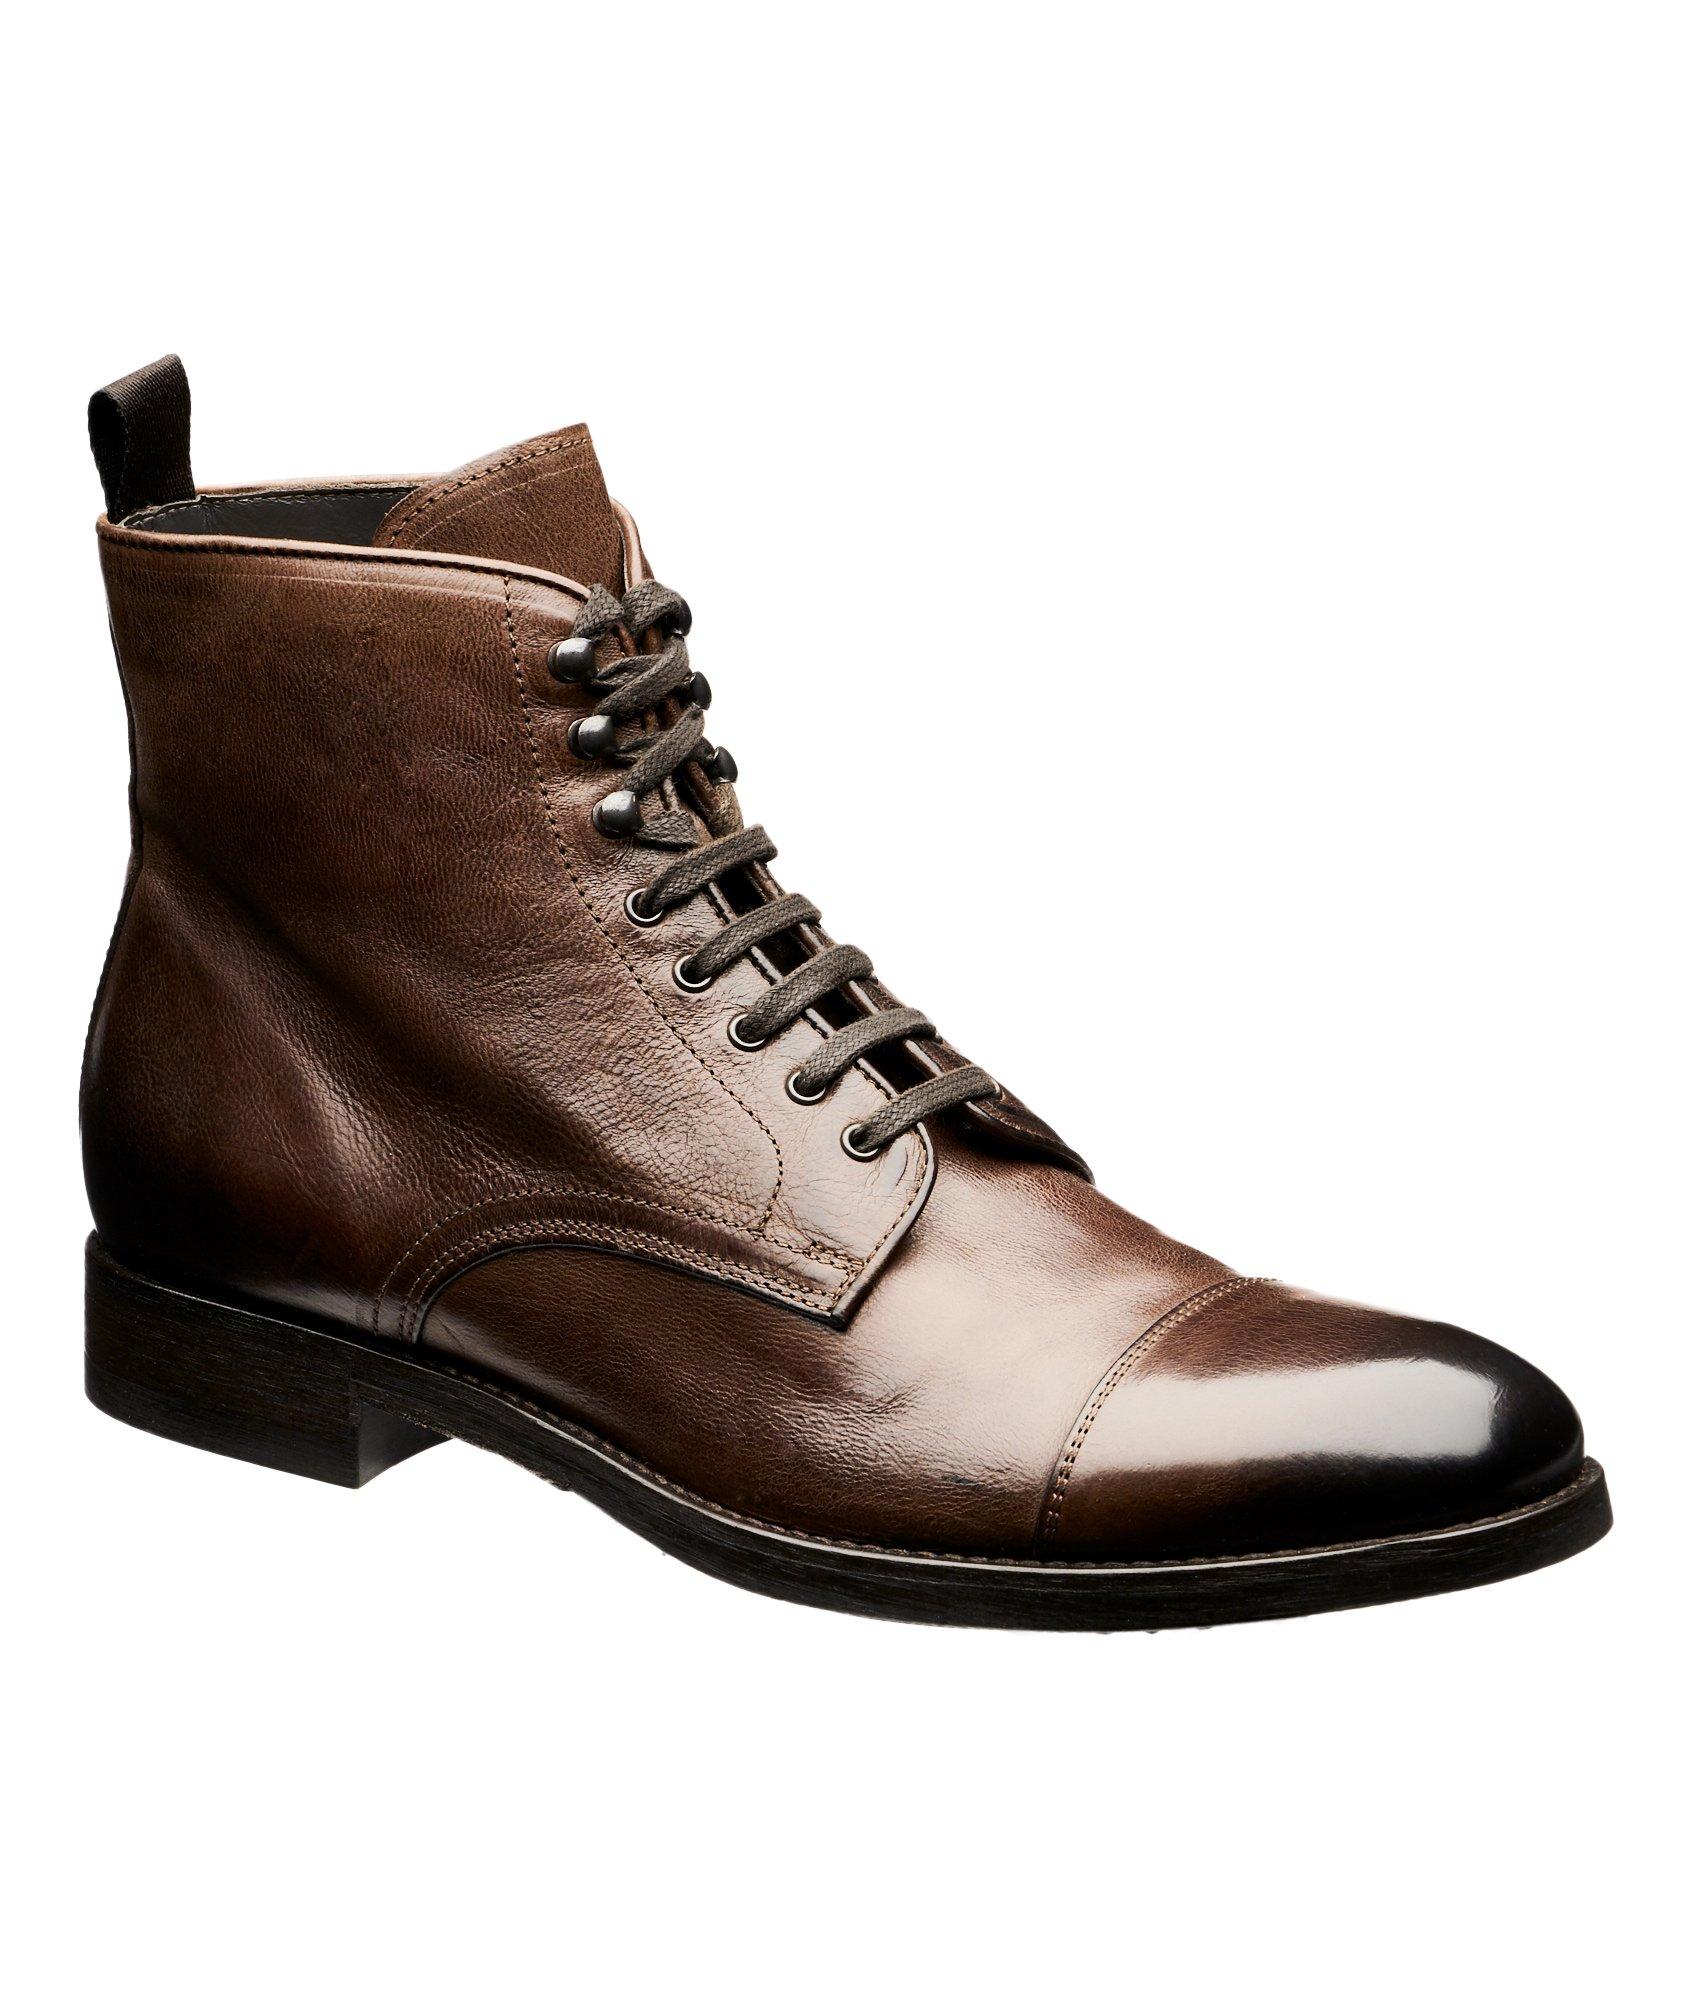 Burnished Cap-Toe Leather Boots image 0